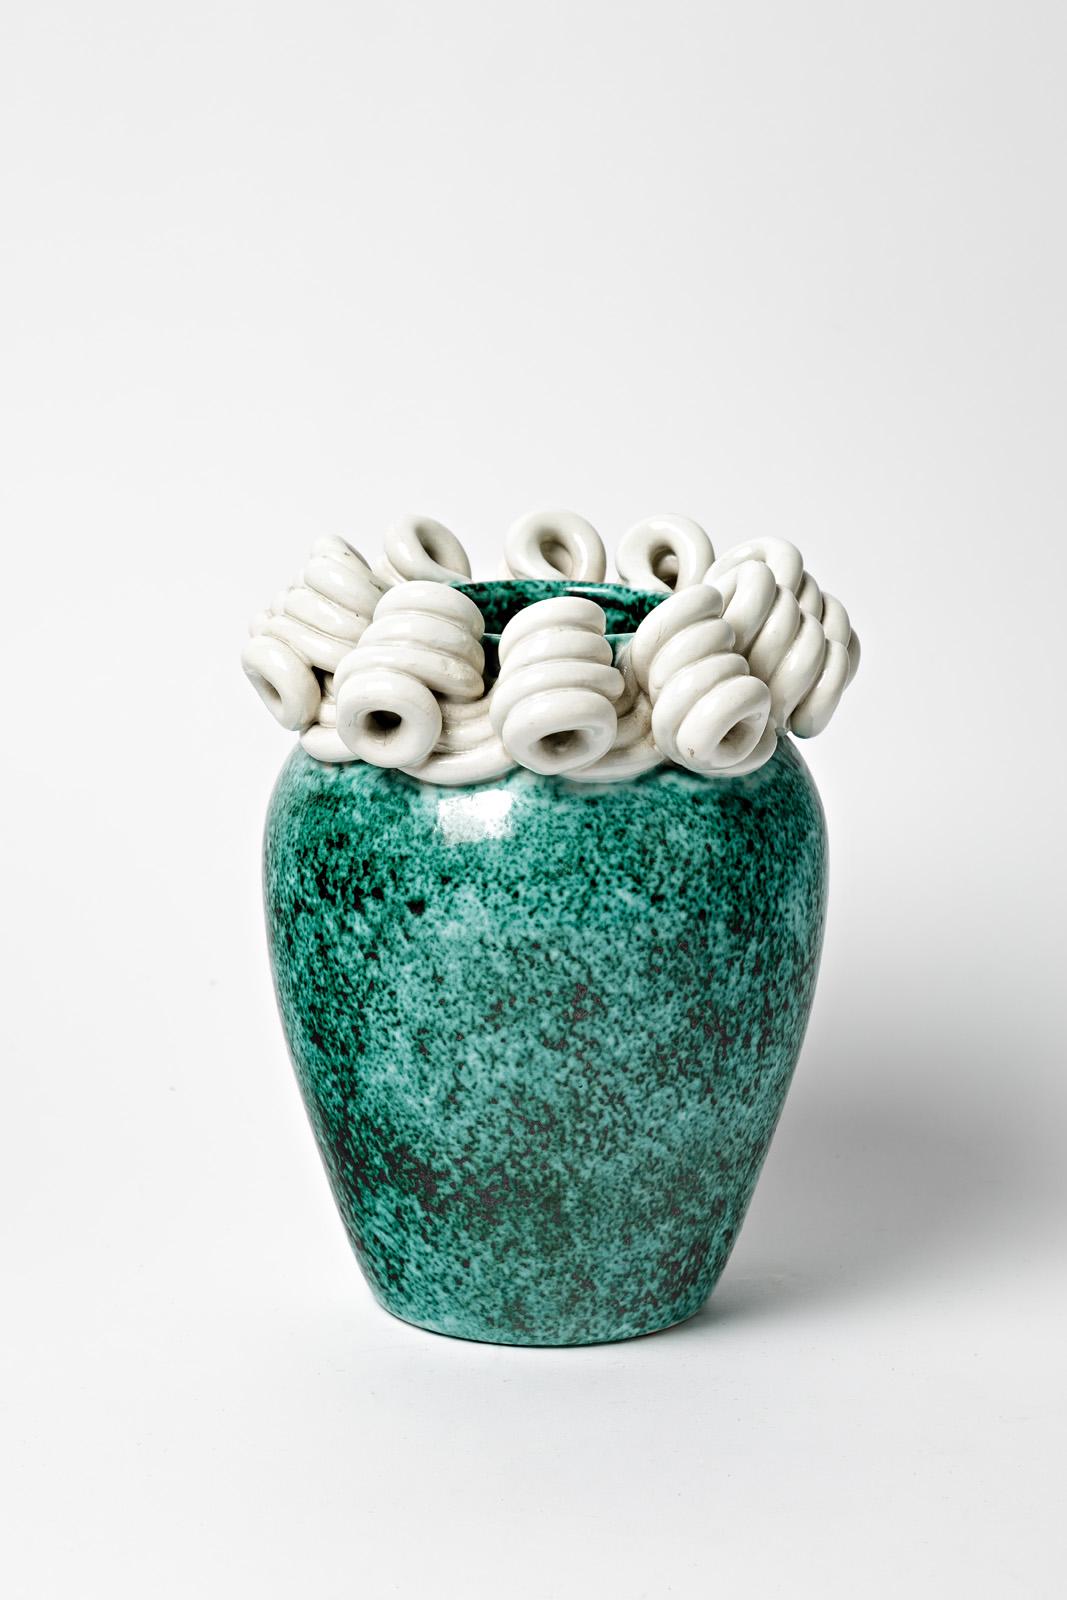 Gustave Asch - Sainte Radegonde

White and green art deco ceramic vase

Signed under the base

Original good condition

height 22 cm
Large 17 cm